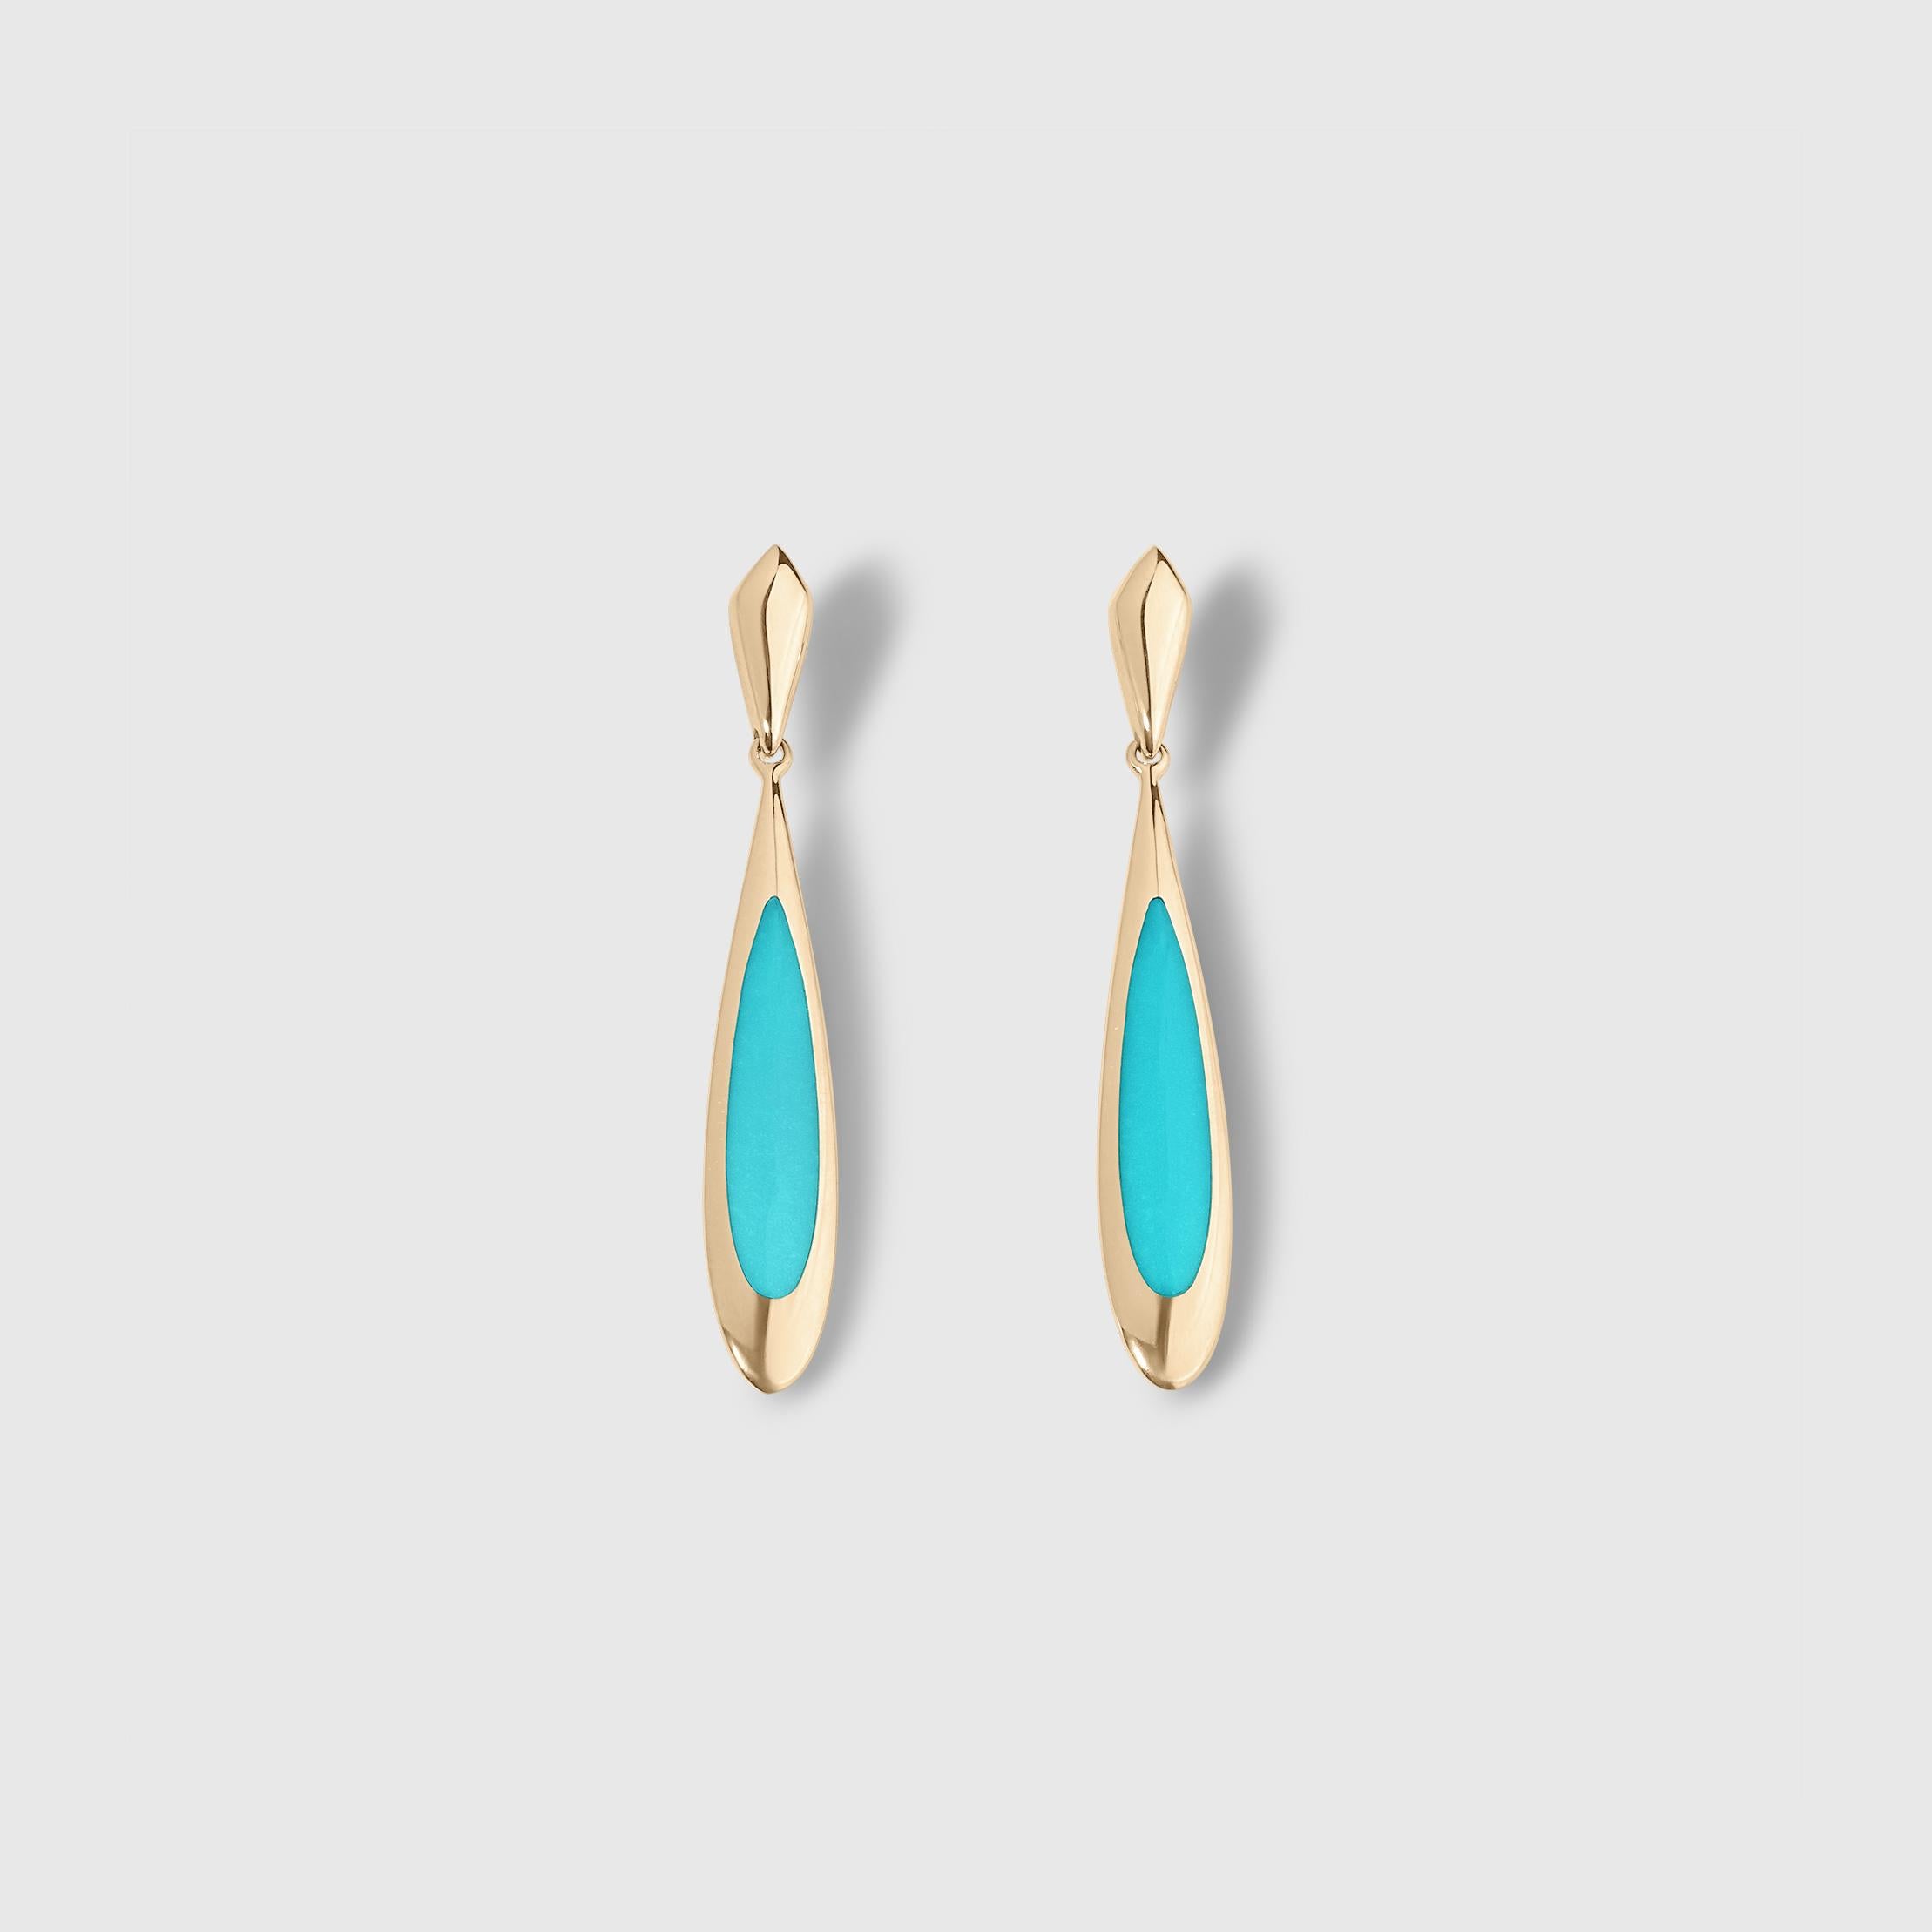 Long Tear-Drop Post Earrings with Sleeping Beauty Turquoise Inlay, 1 1/2